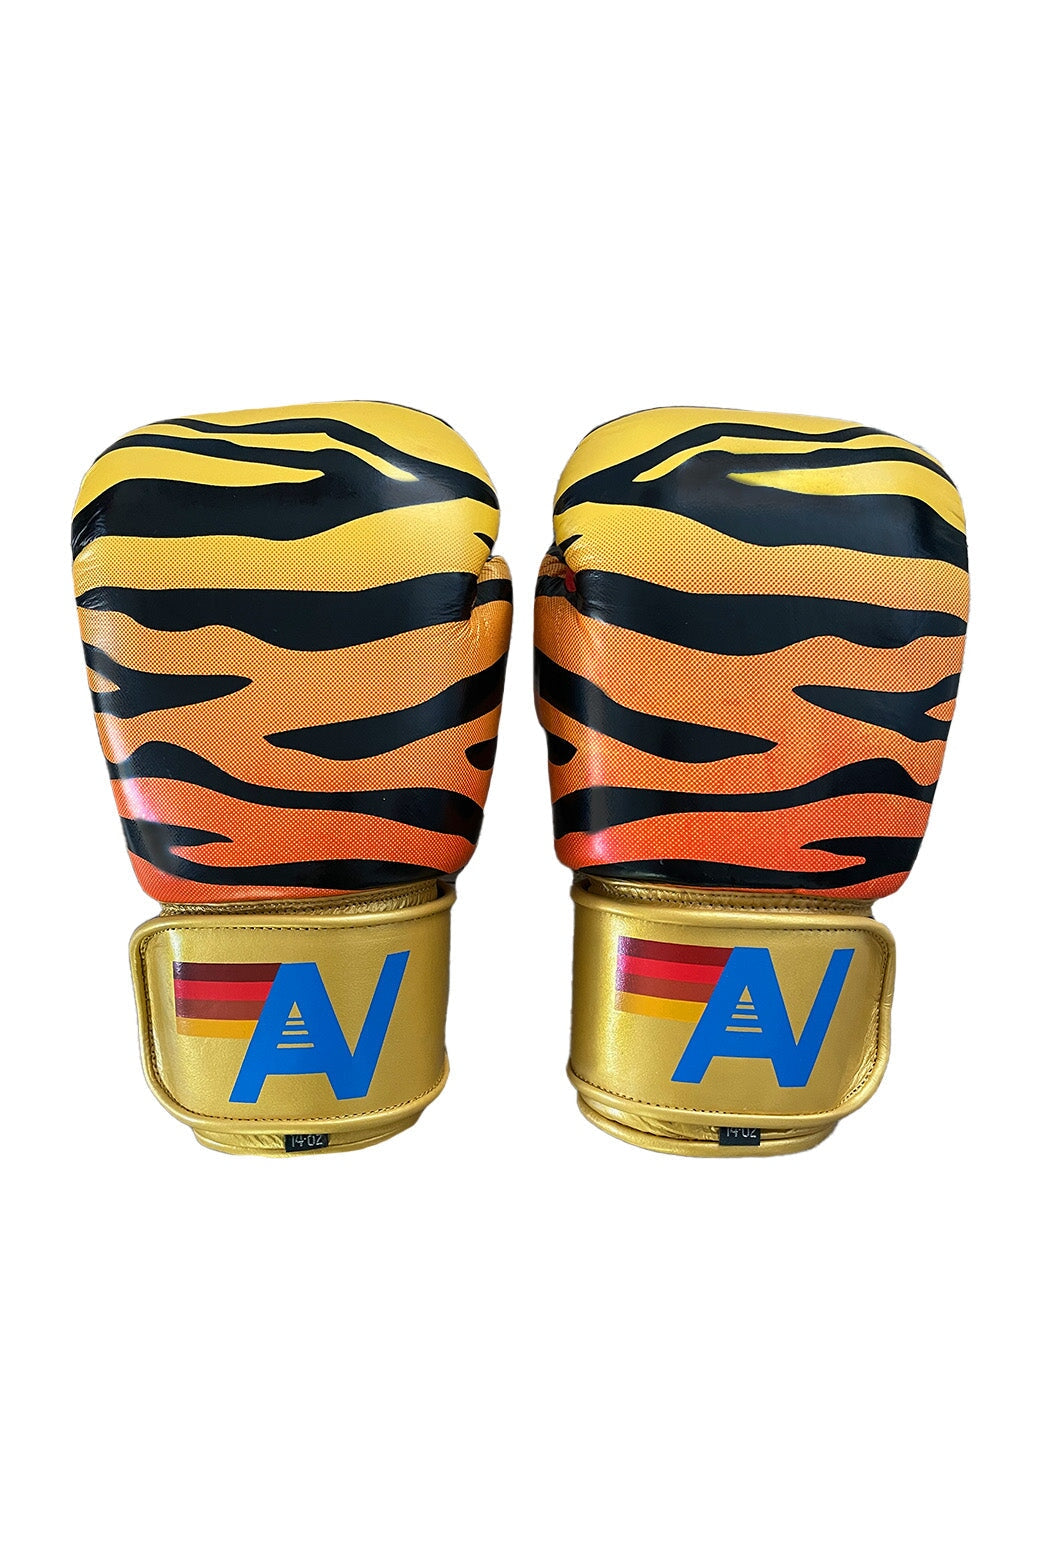 BOXING GLOVES - TIGER // GOLD Boxing Gloves Aviator Nation 